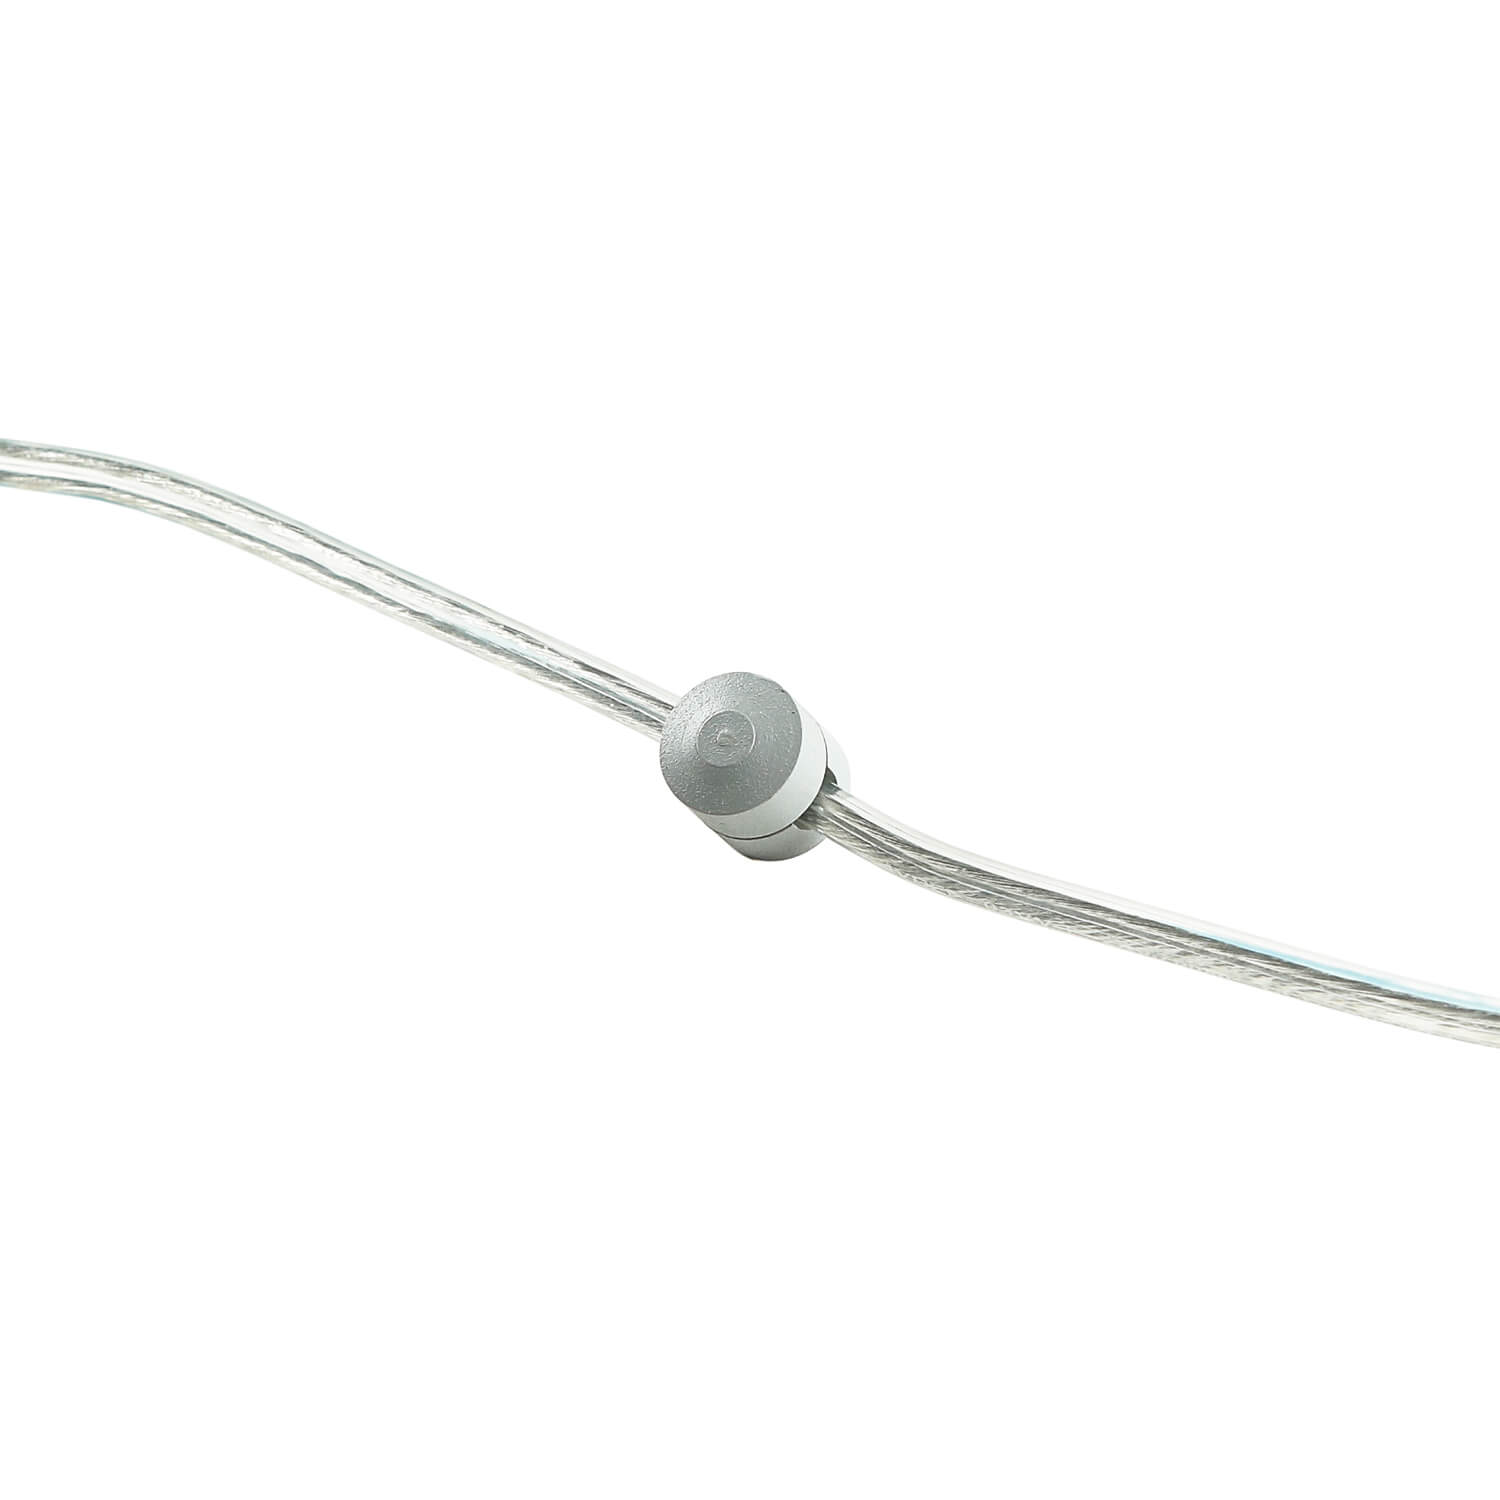 Hängelampe mit Stecker Kabel 5,5 m lang Grau flexibel